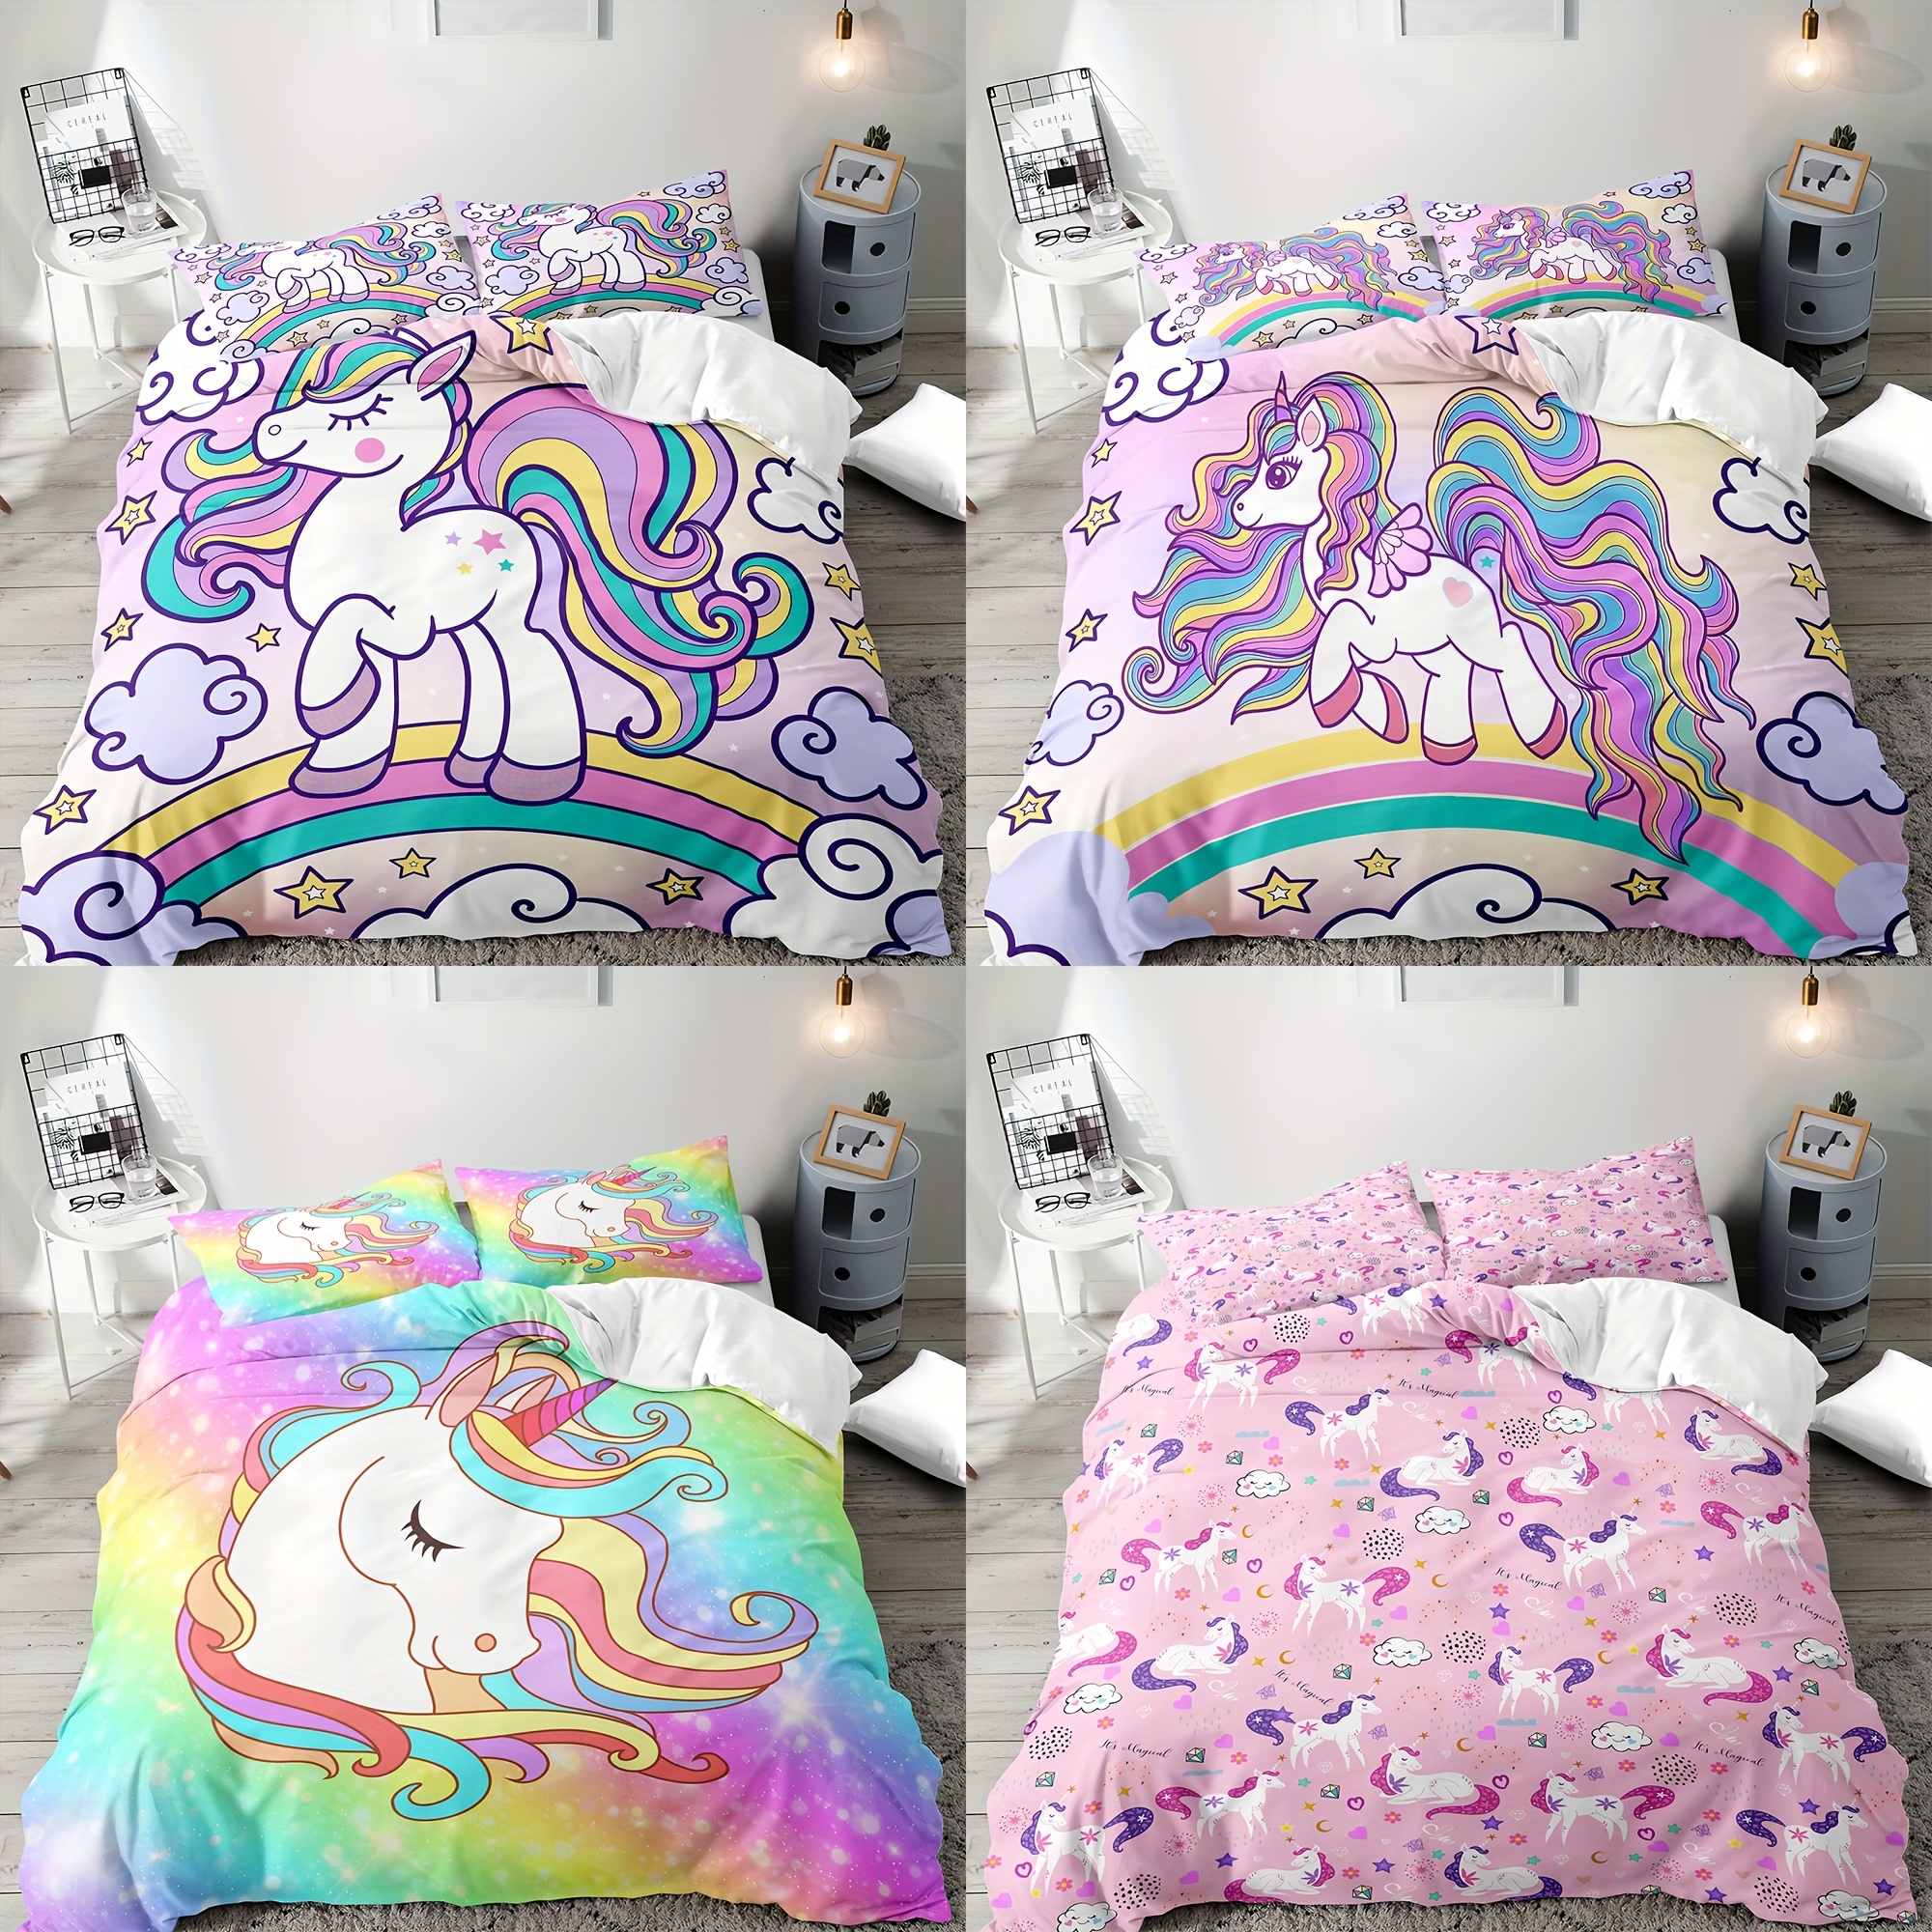 King Size Microfibre Duvet Cover Set 220 x 240 cm, Unicorn Duvet Cover with  2 Pillowcases for Kids Adults